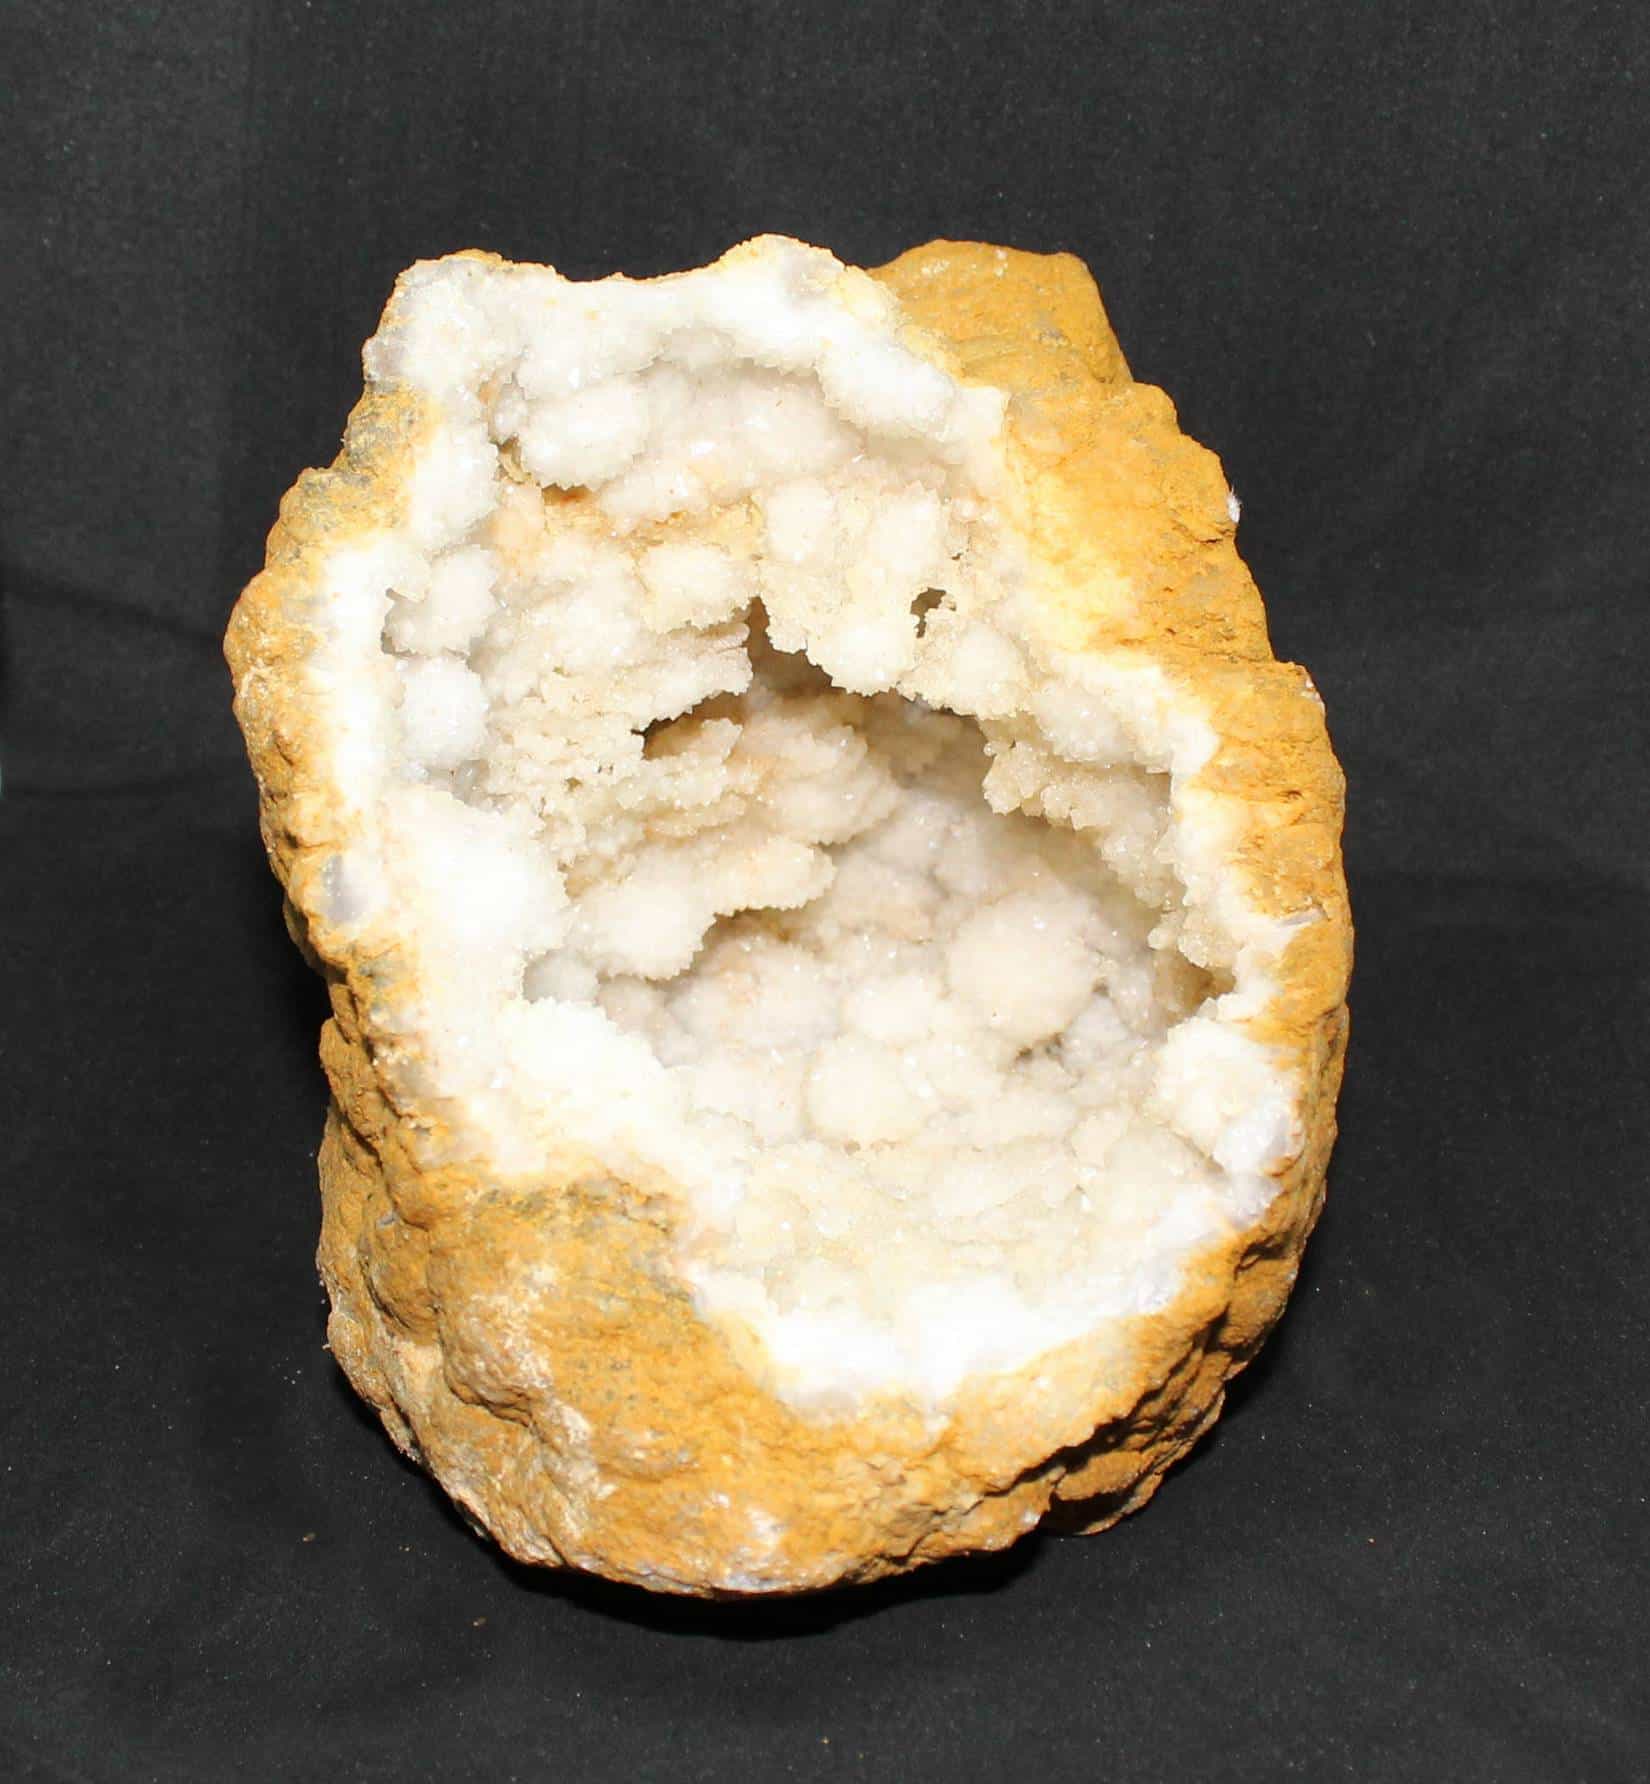 Unbroken Small & Large White Quartz Geodes Mineral Natural Unopened Stone x 1kg 